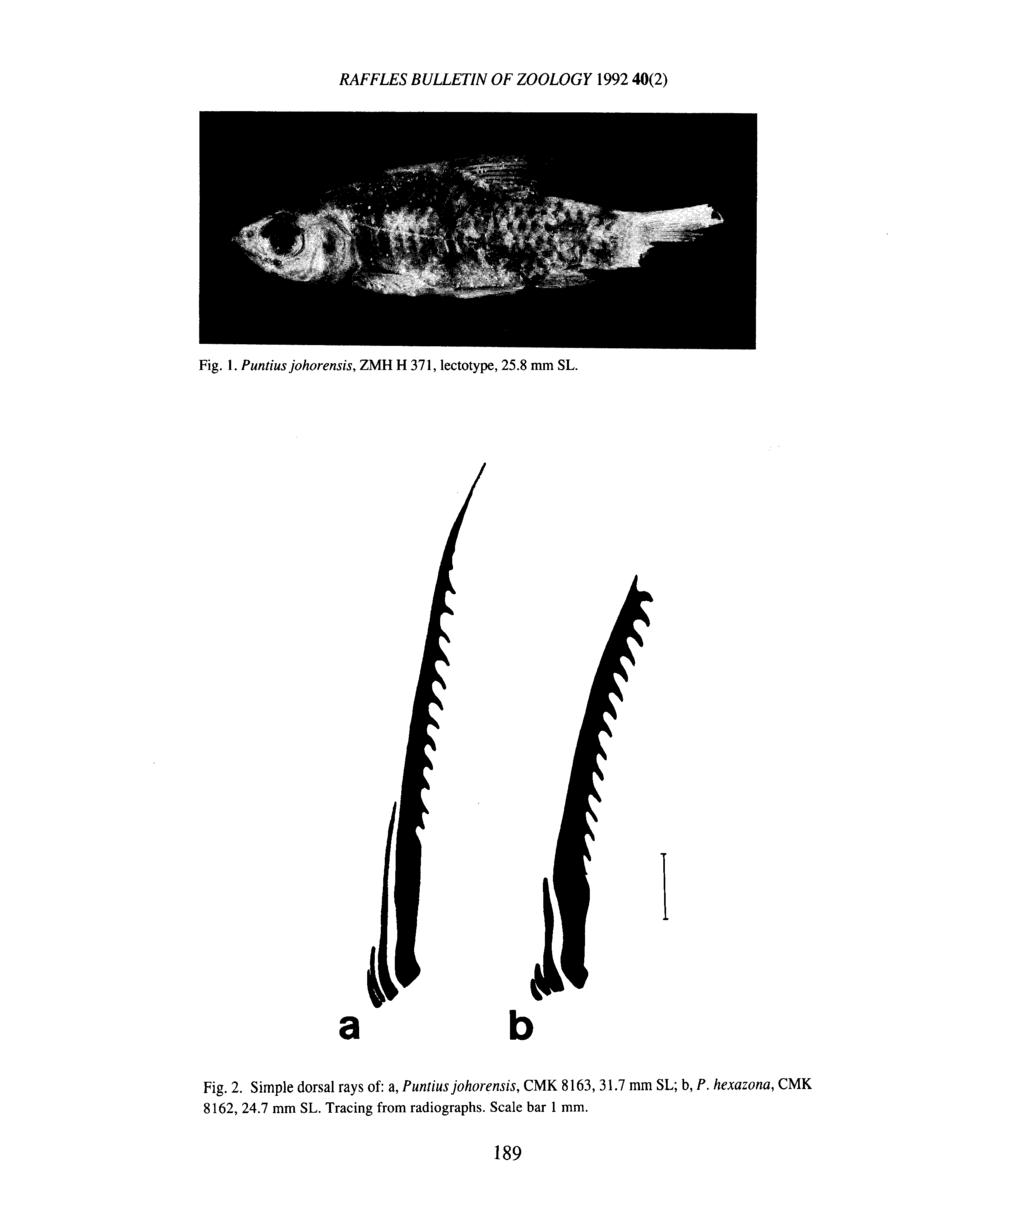 b Fig. 2. Simple dorsal rays of: a, Puntiusjohorensis, 8162,24.7 mm SL.